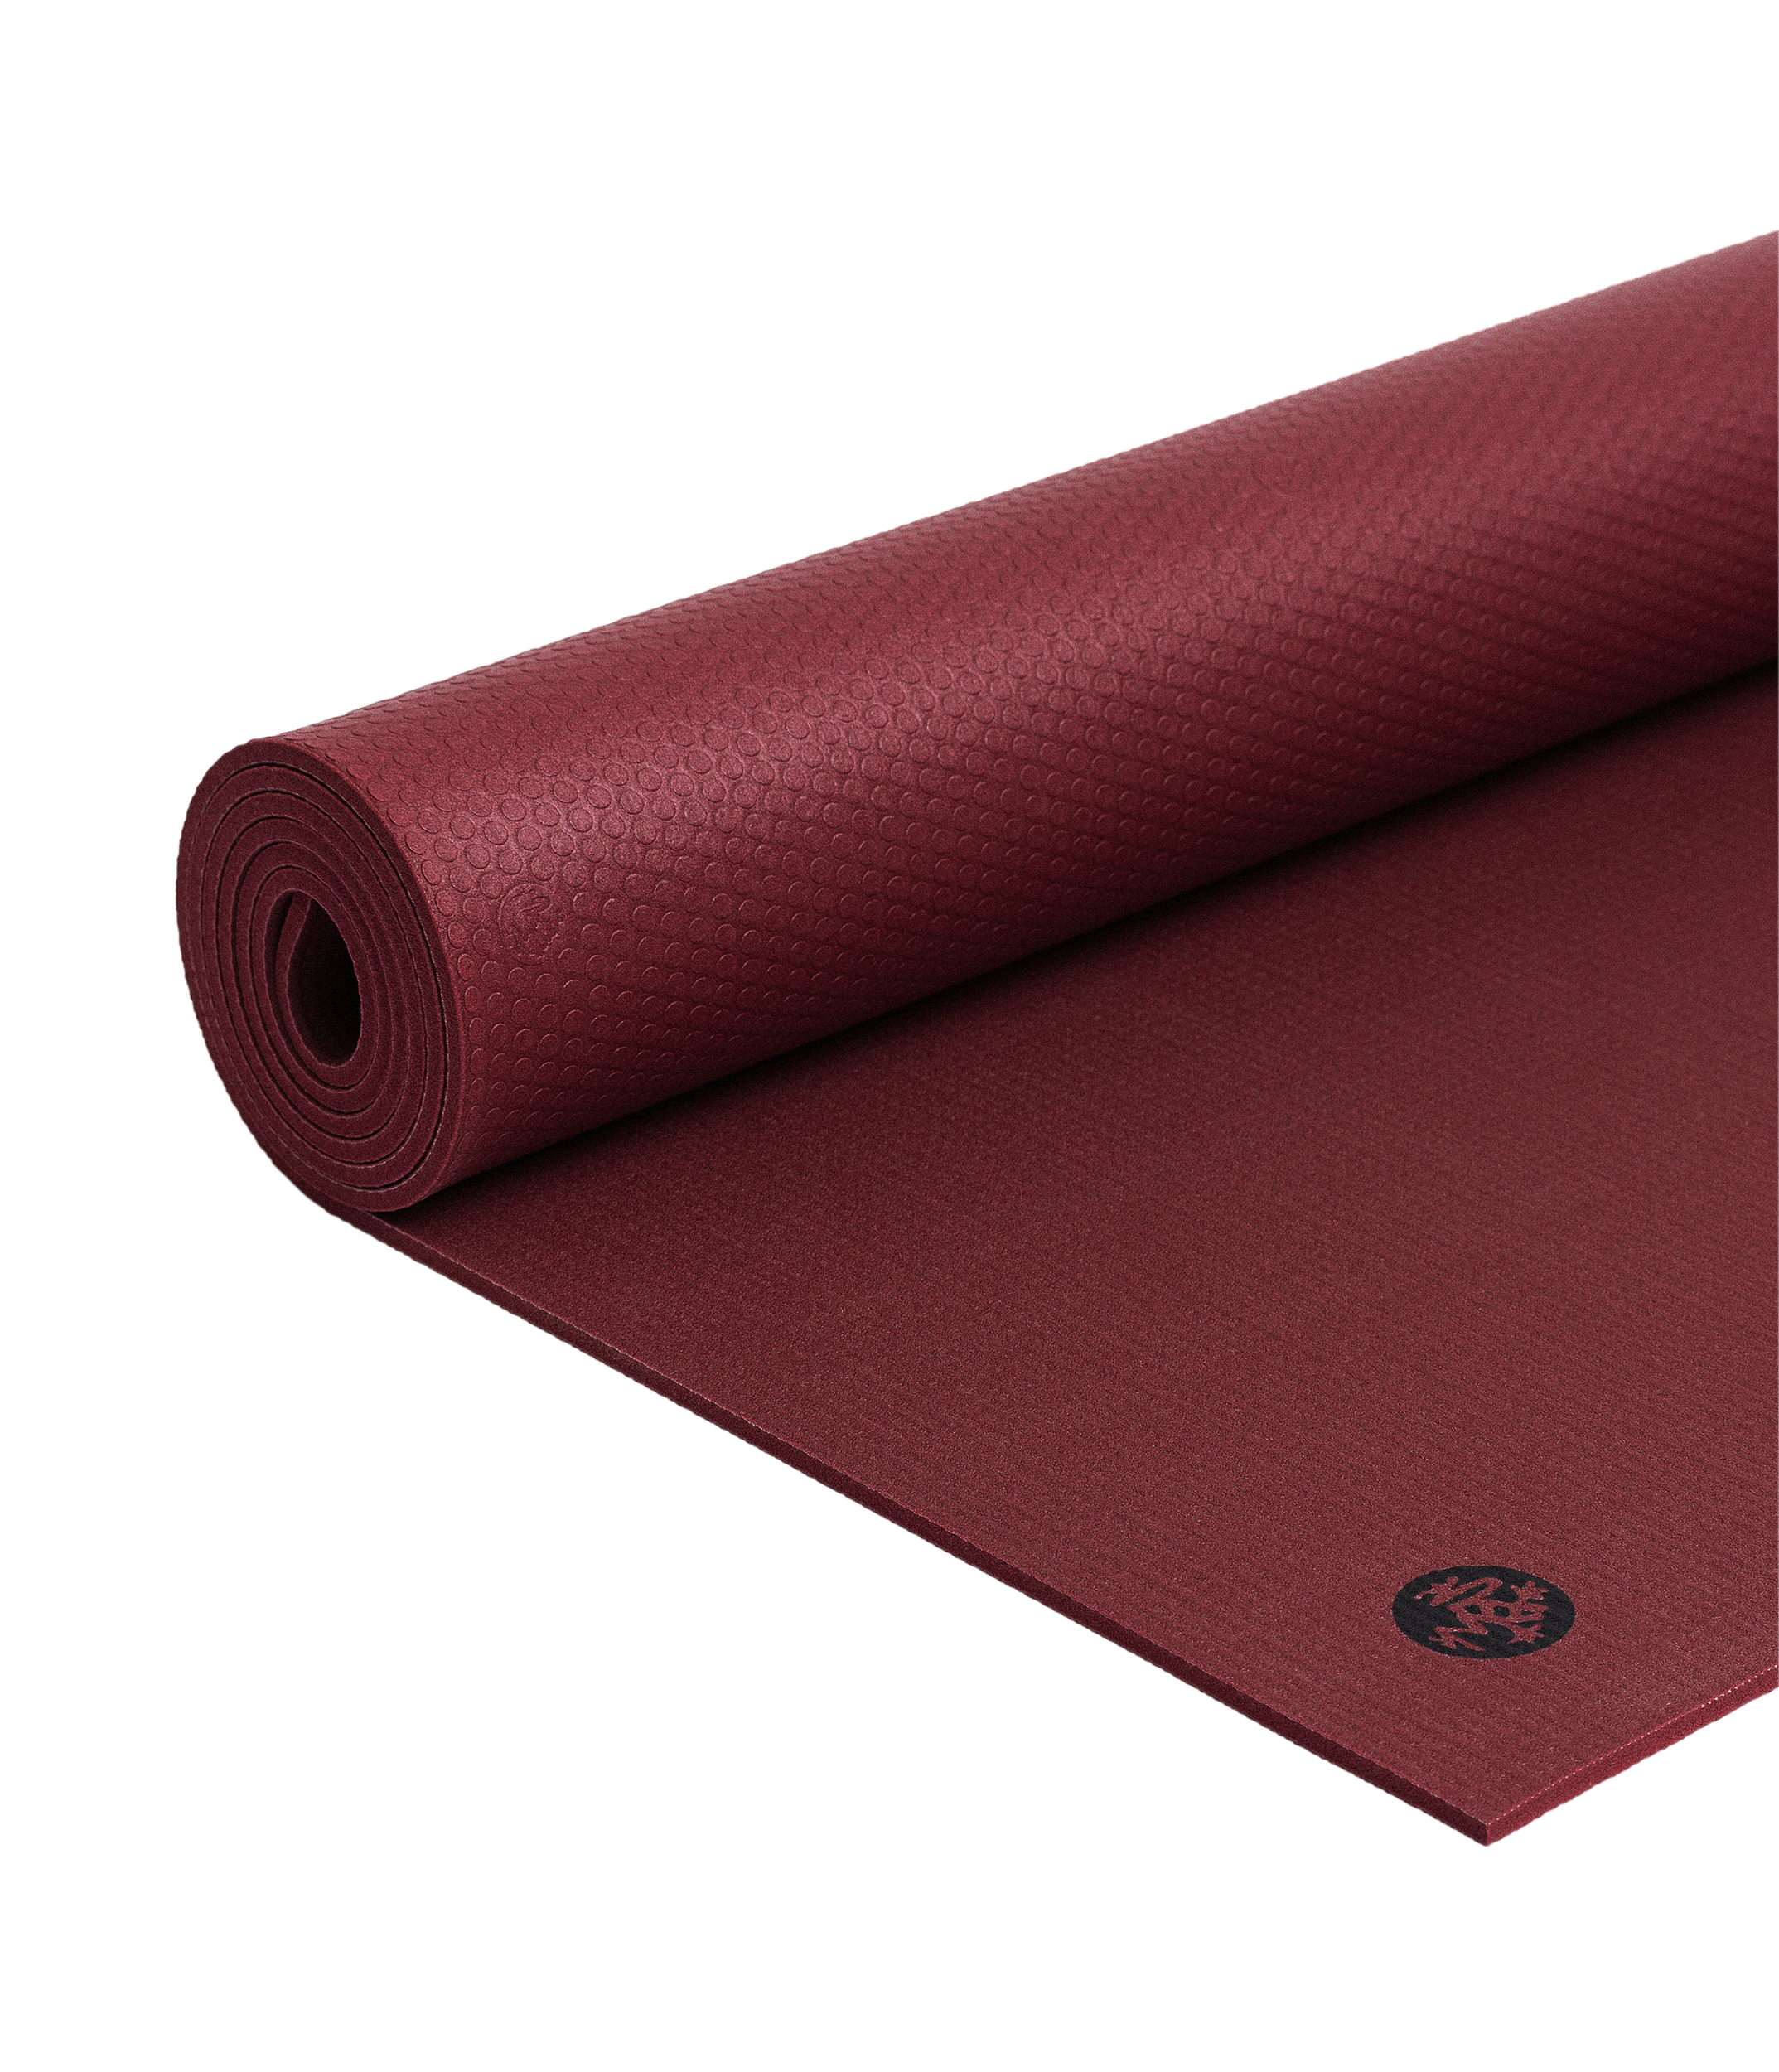 pro exercise mat